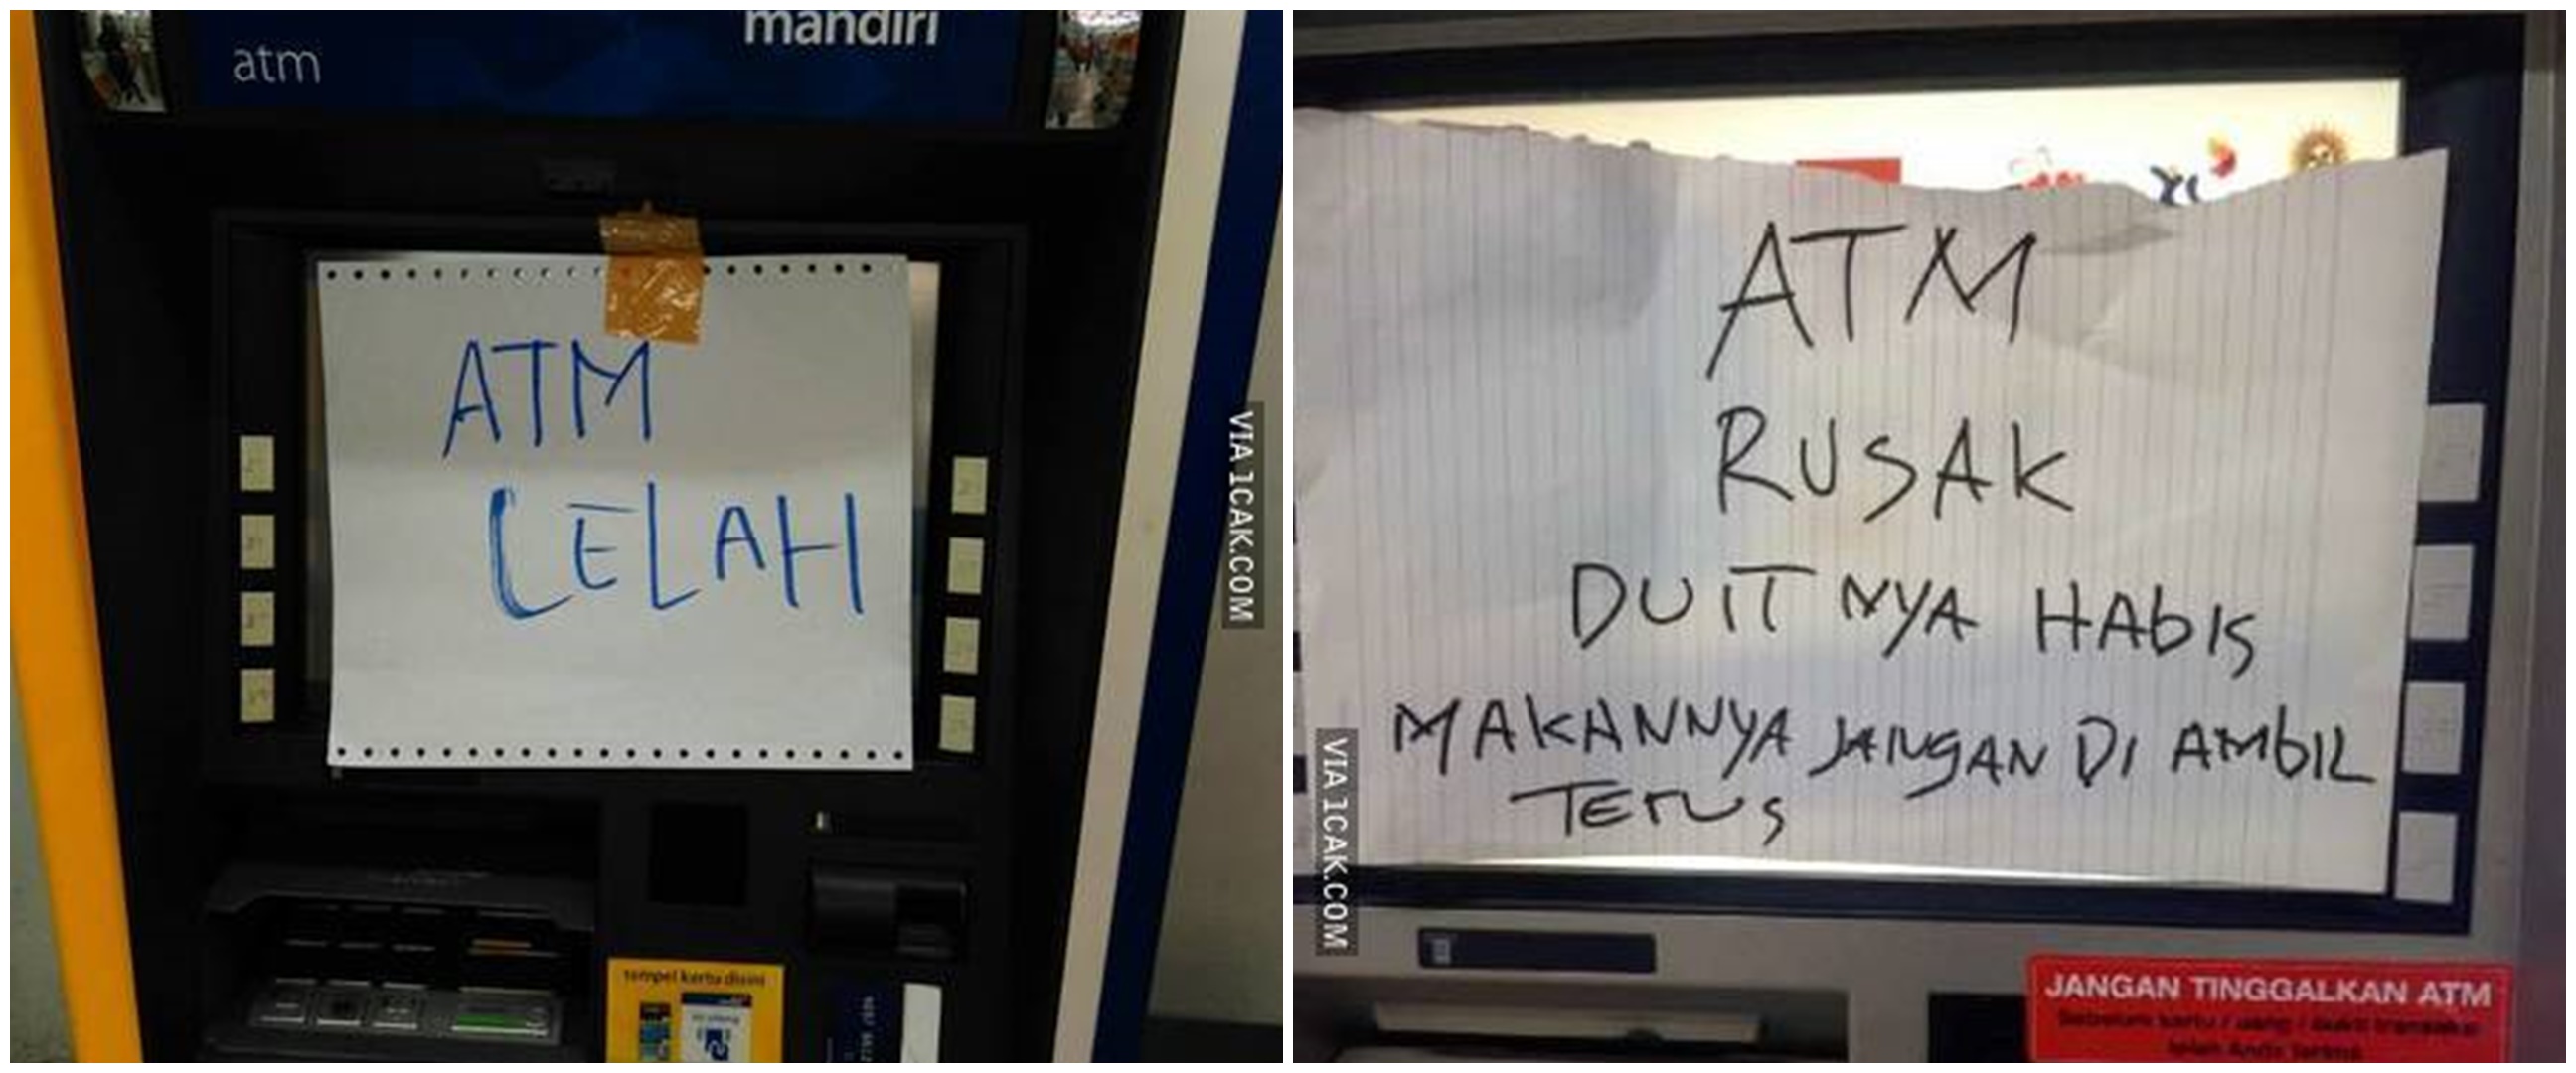 11 Potret kocak tulisan di ATM rusak ini bikin senyum kesal, endingnya menghela napas